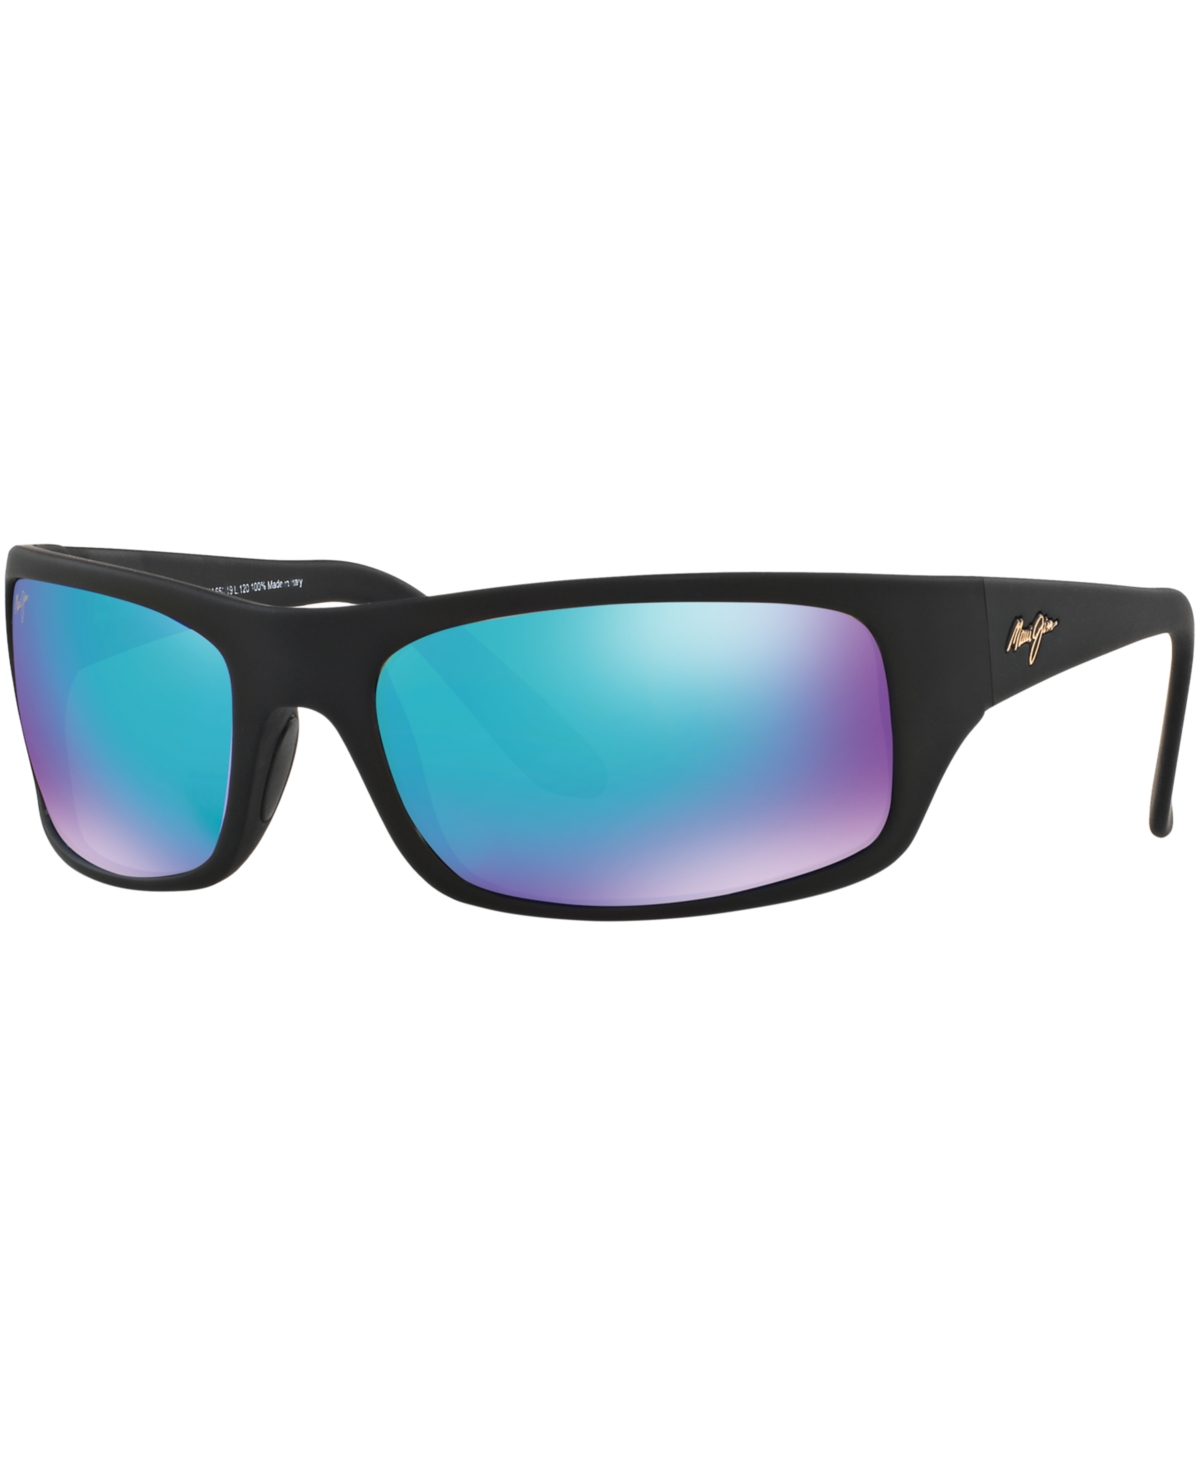 Peahi Polarized Sunglasses , 202 Blue Hawaii Collection - BLACK MATTE/BLUE MIRROR POLAR